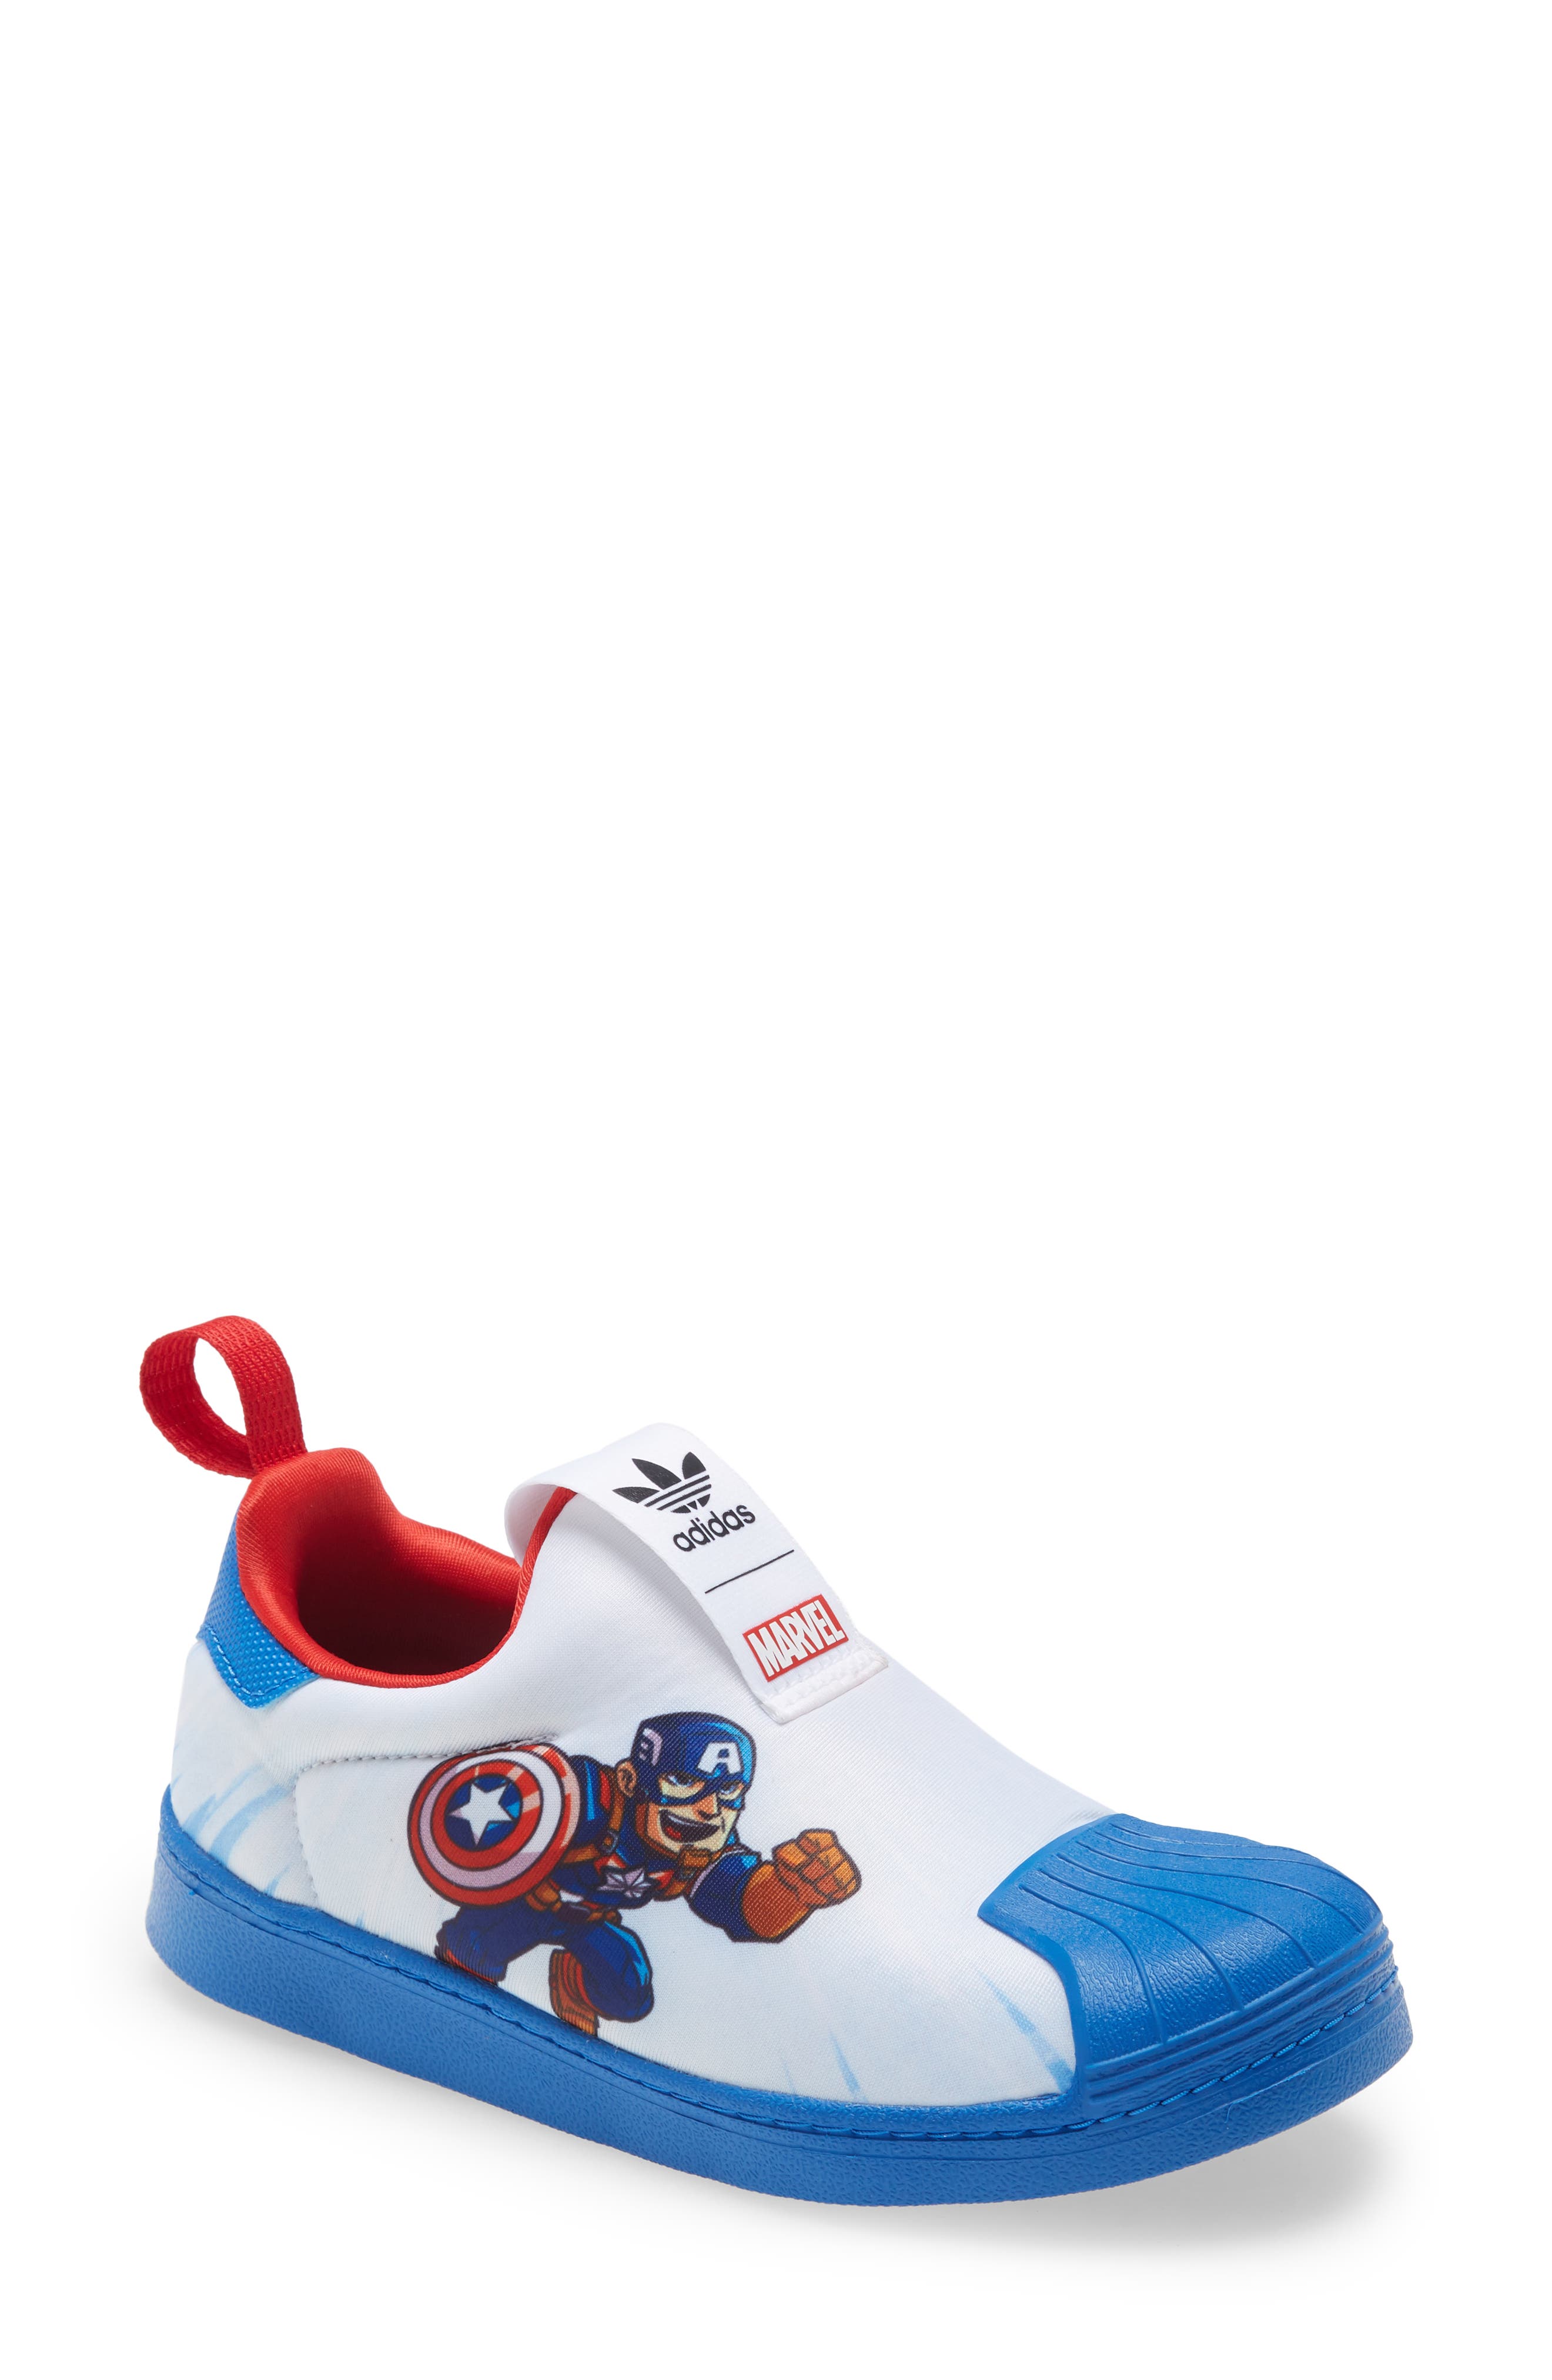 captain america shoes adidas